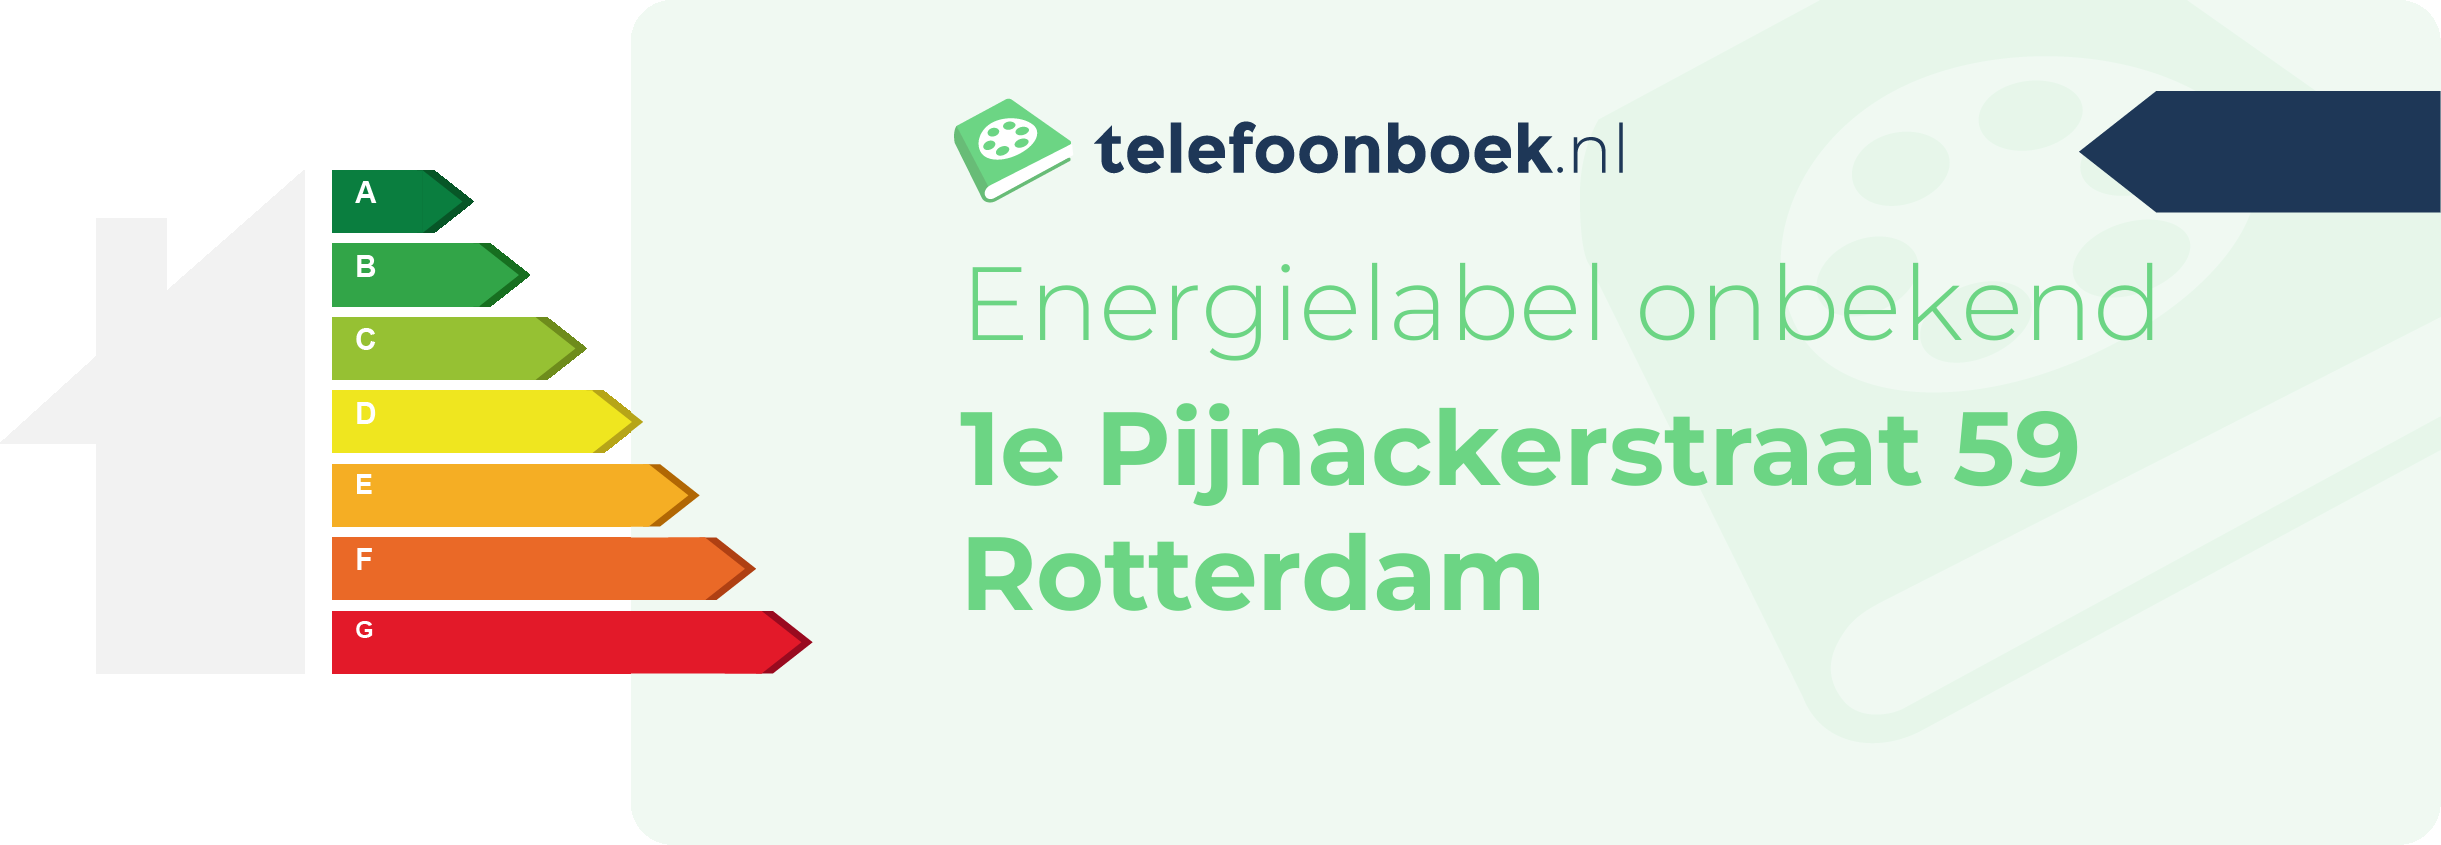 Energielabel 1e Pijnackerstraat 59 Rotterdam